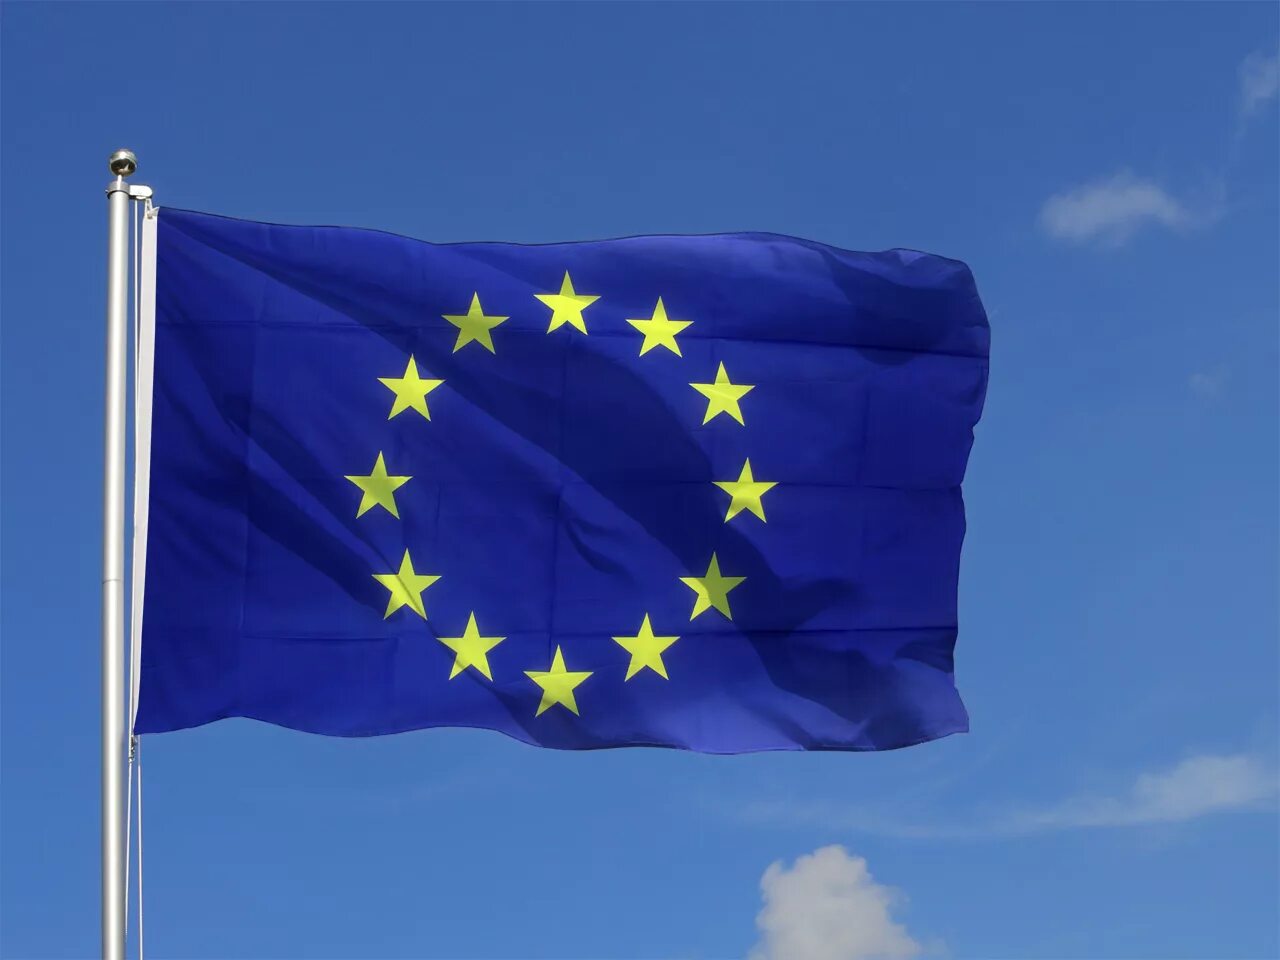 Звезды флага евросоюза. Флаг European Union. Европейский Союз. Еврокомиссия флаг. Европейский Союз, ЕС, eu.